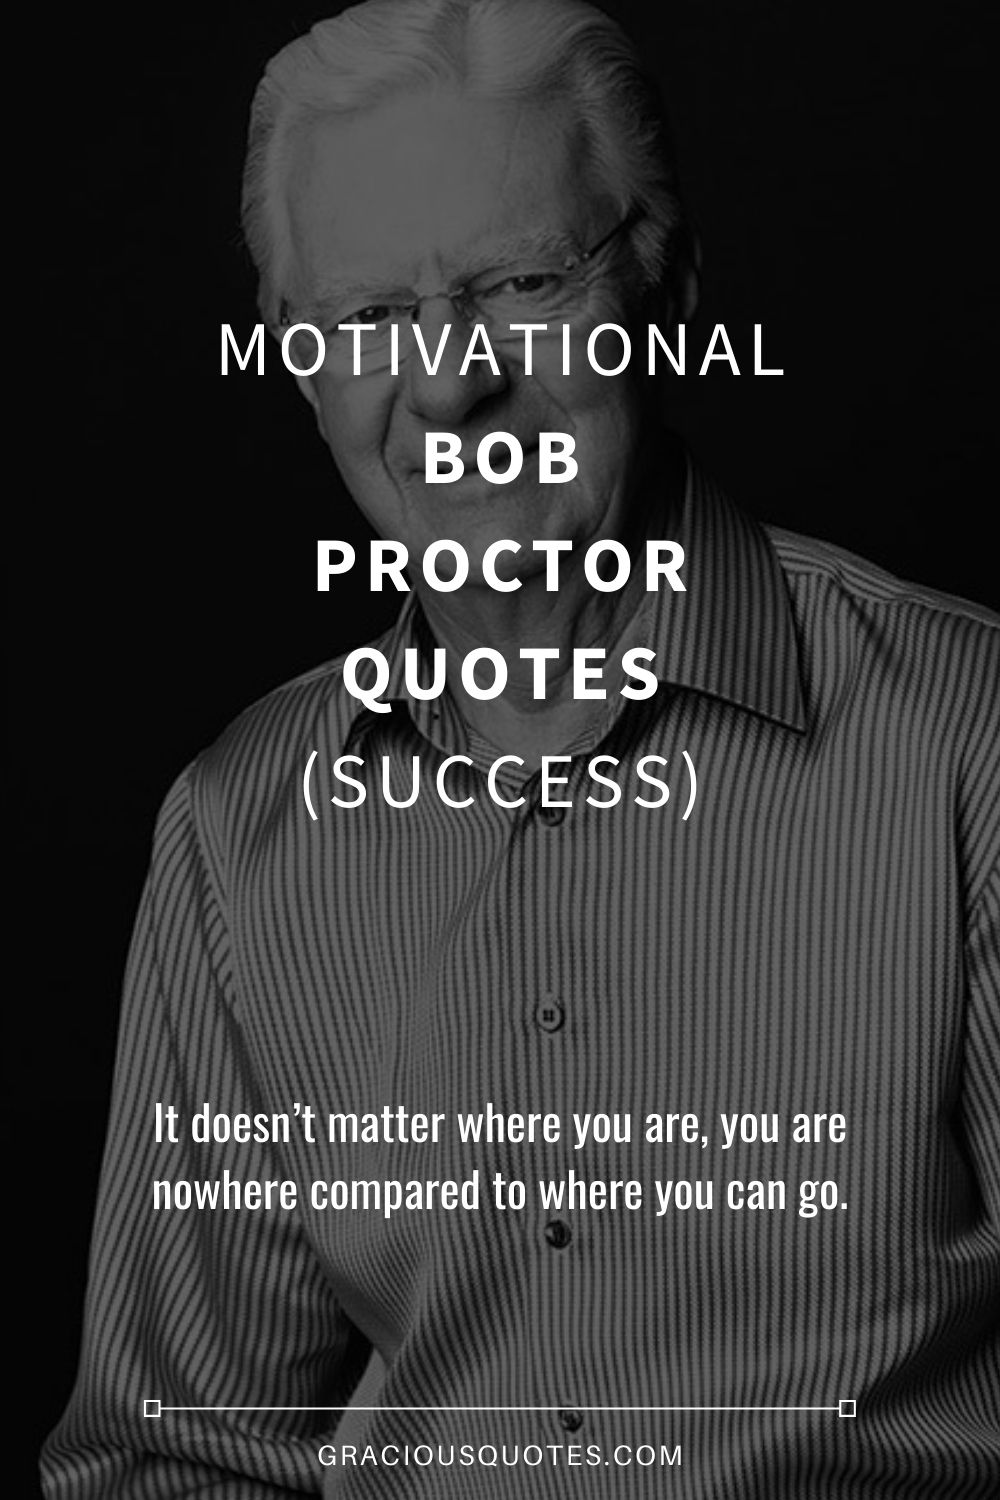 54 Motivational Bob Proctor Quotes (SUCCESS)